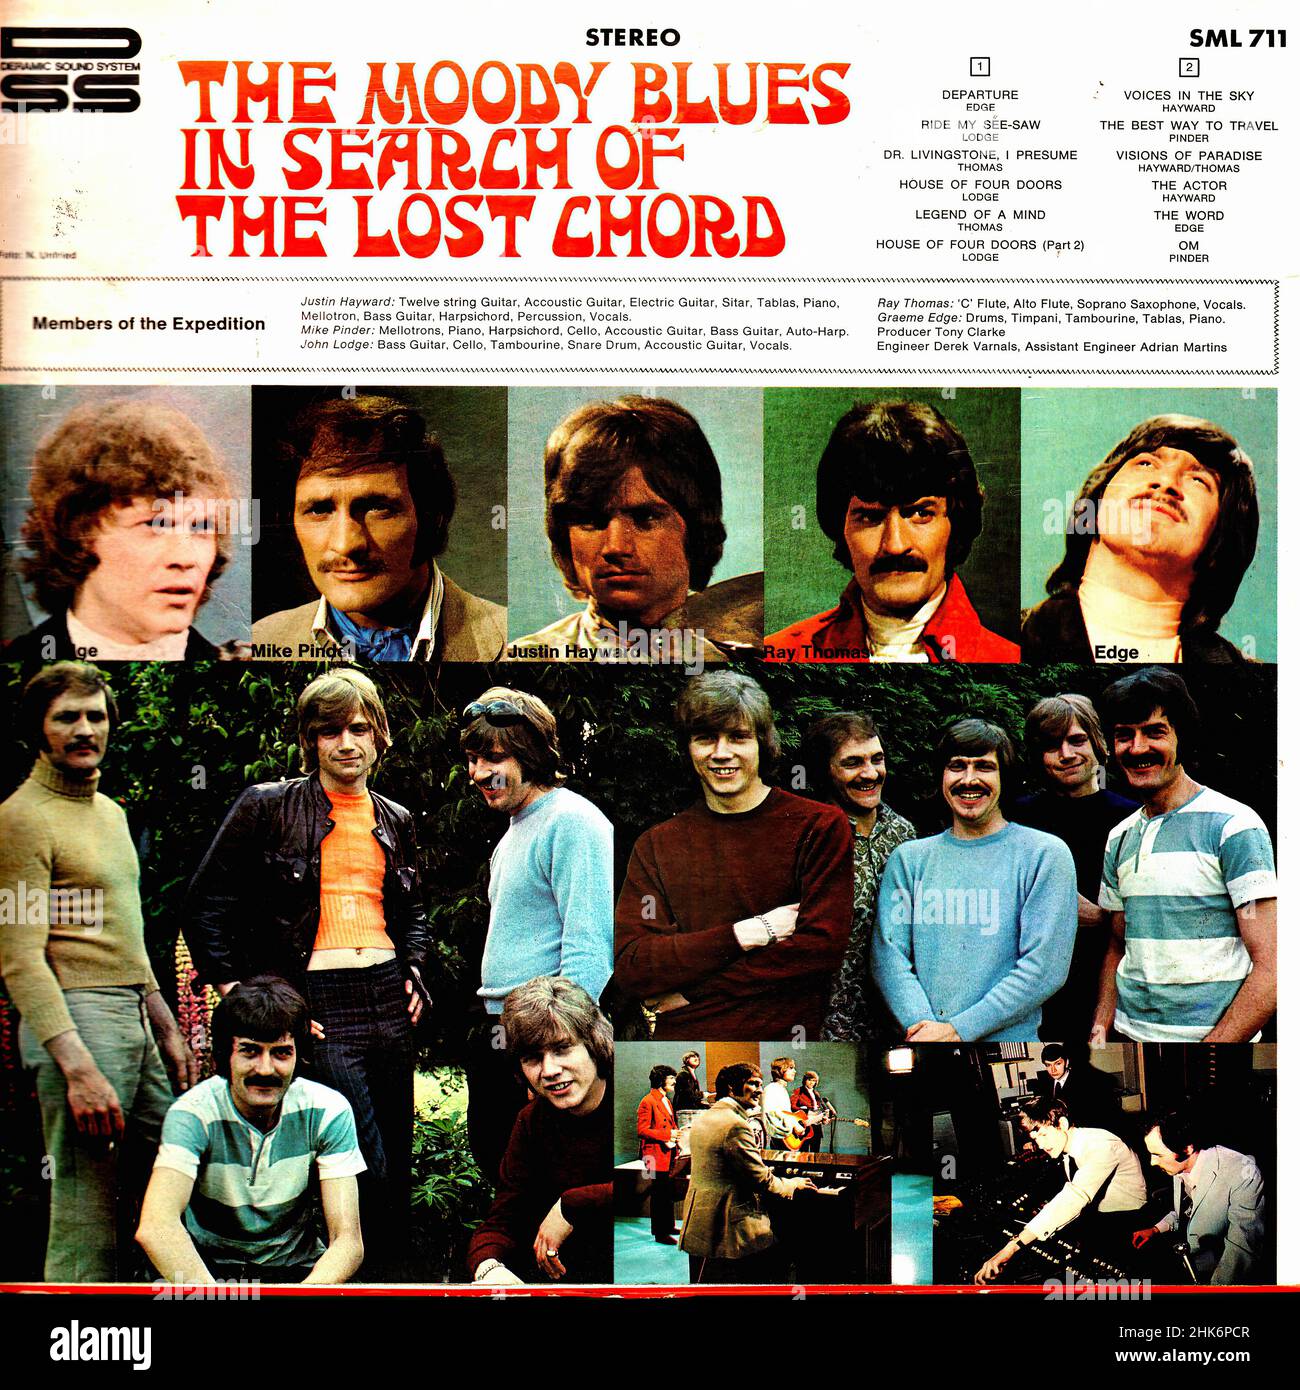 Copertina Vintage vinyl record - Moody Blues, The - alla ricerca del cordone perduto - D - 1968 01 Foto Stock